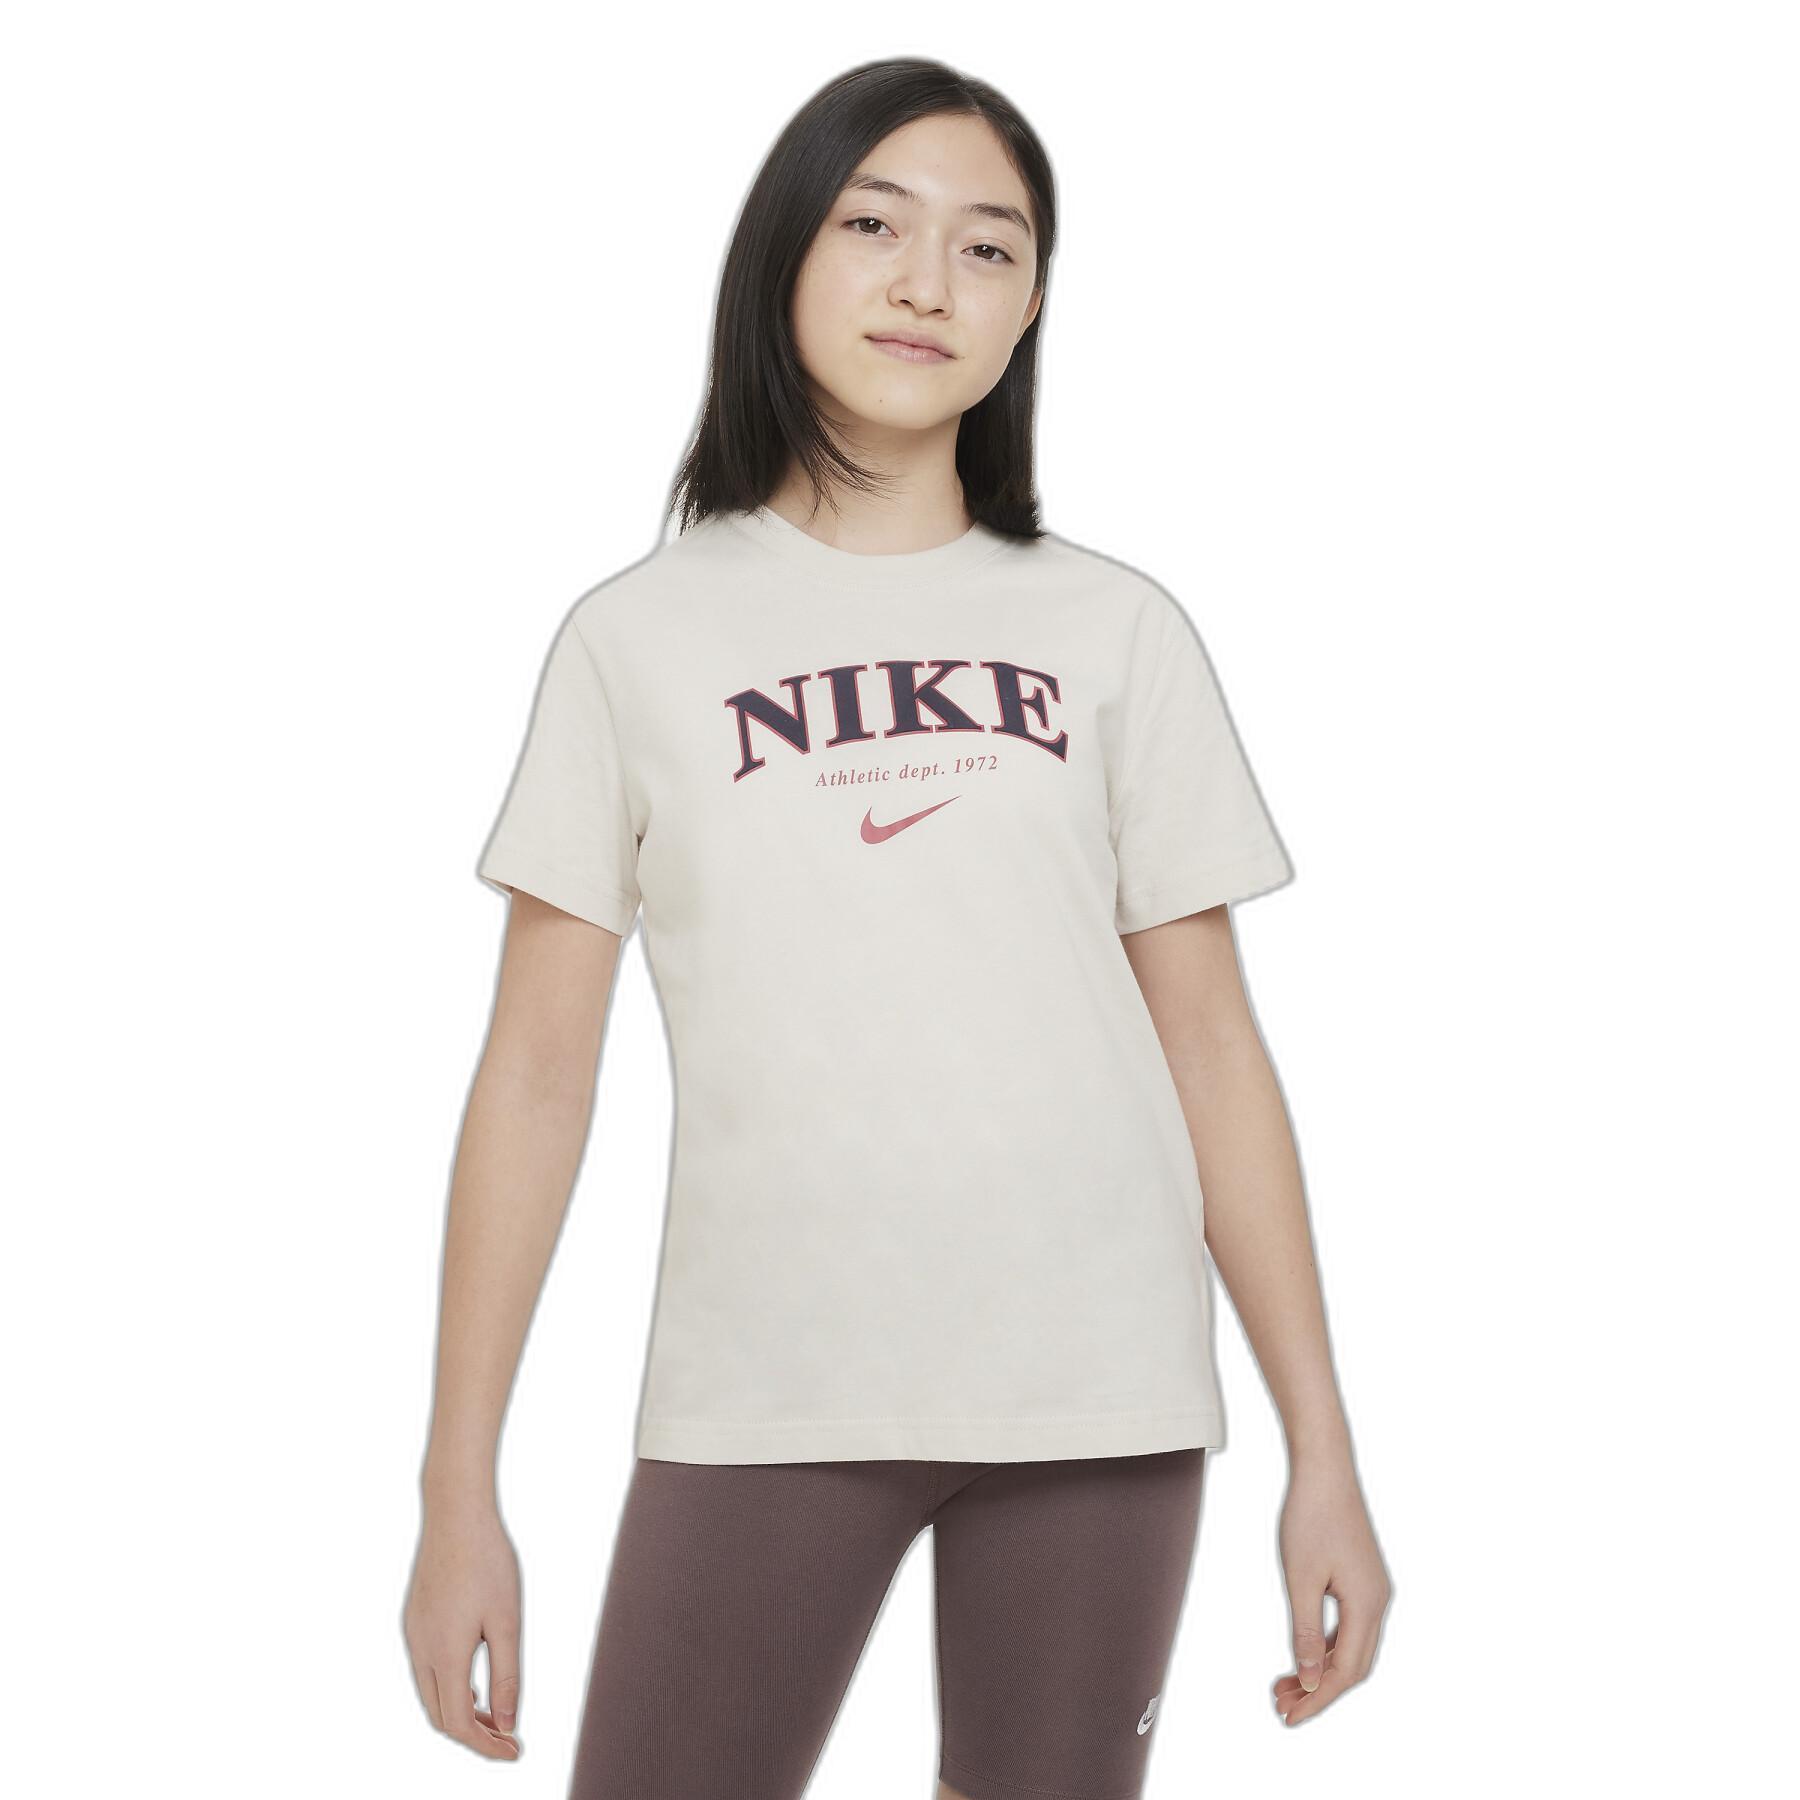 Girl's T-shirt Nike Trend BF PrInt - Polos & T-shirts - Kid's clothing -  Lifestyle